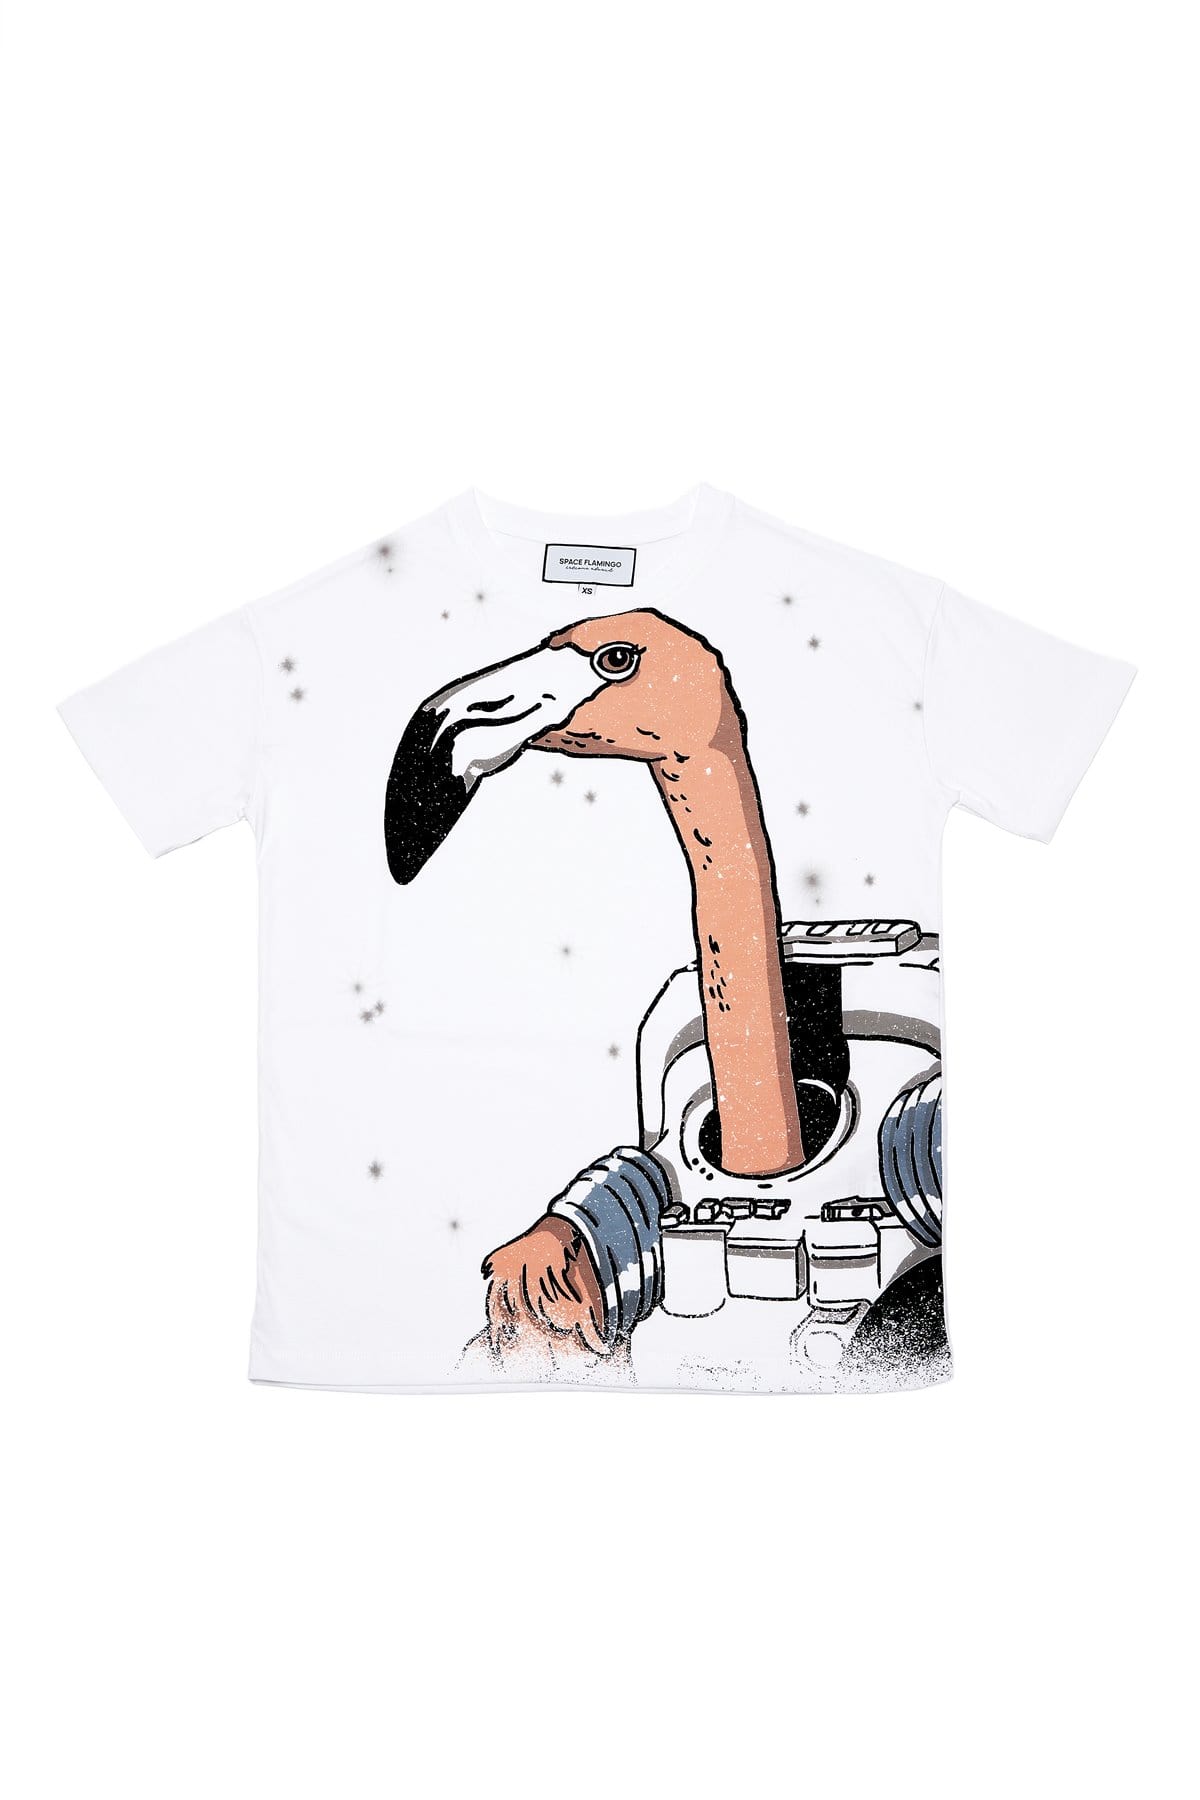 space flamingo (1)-min